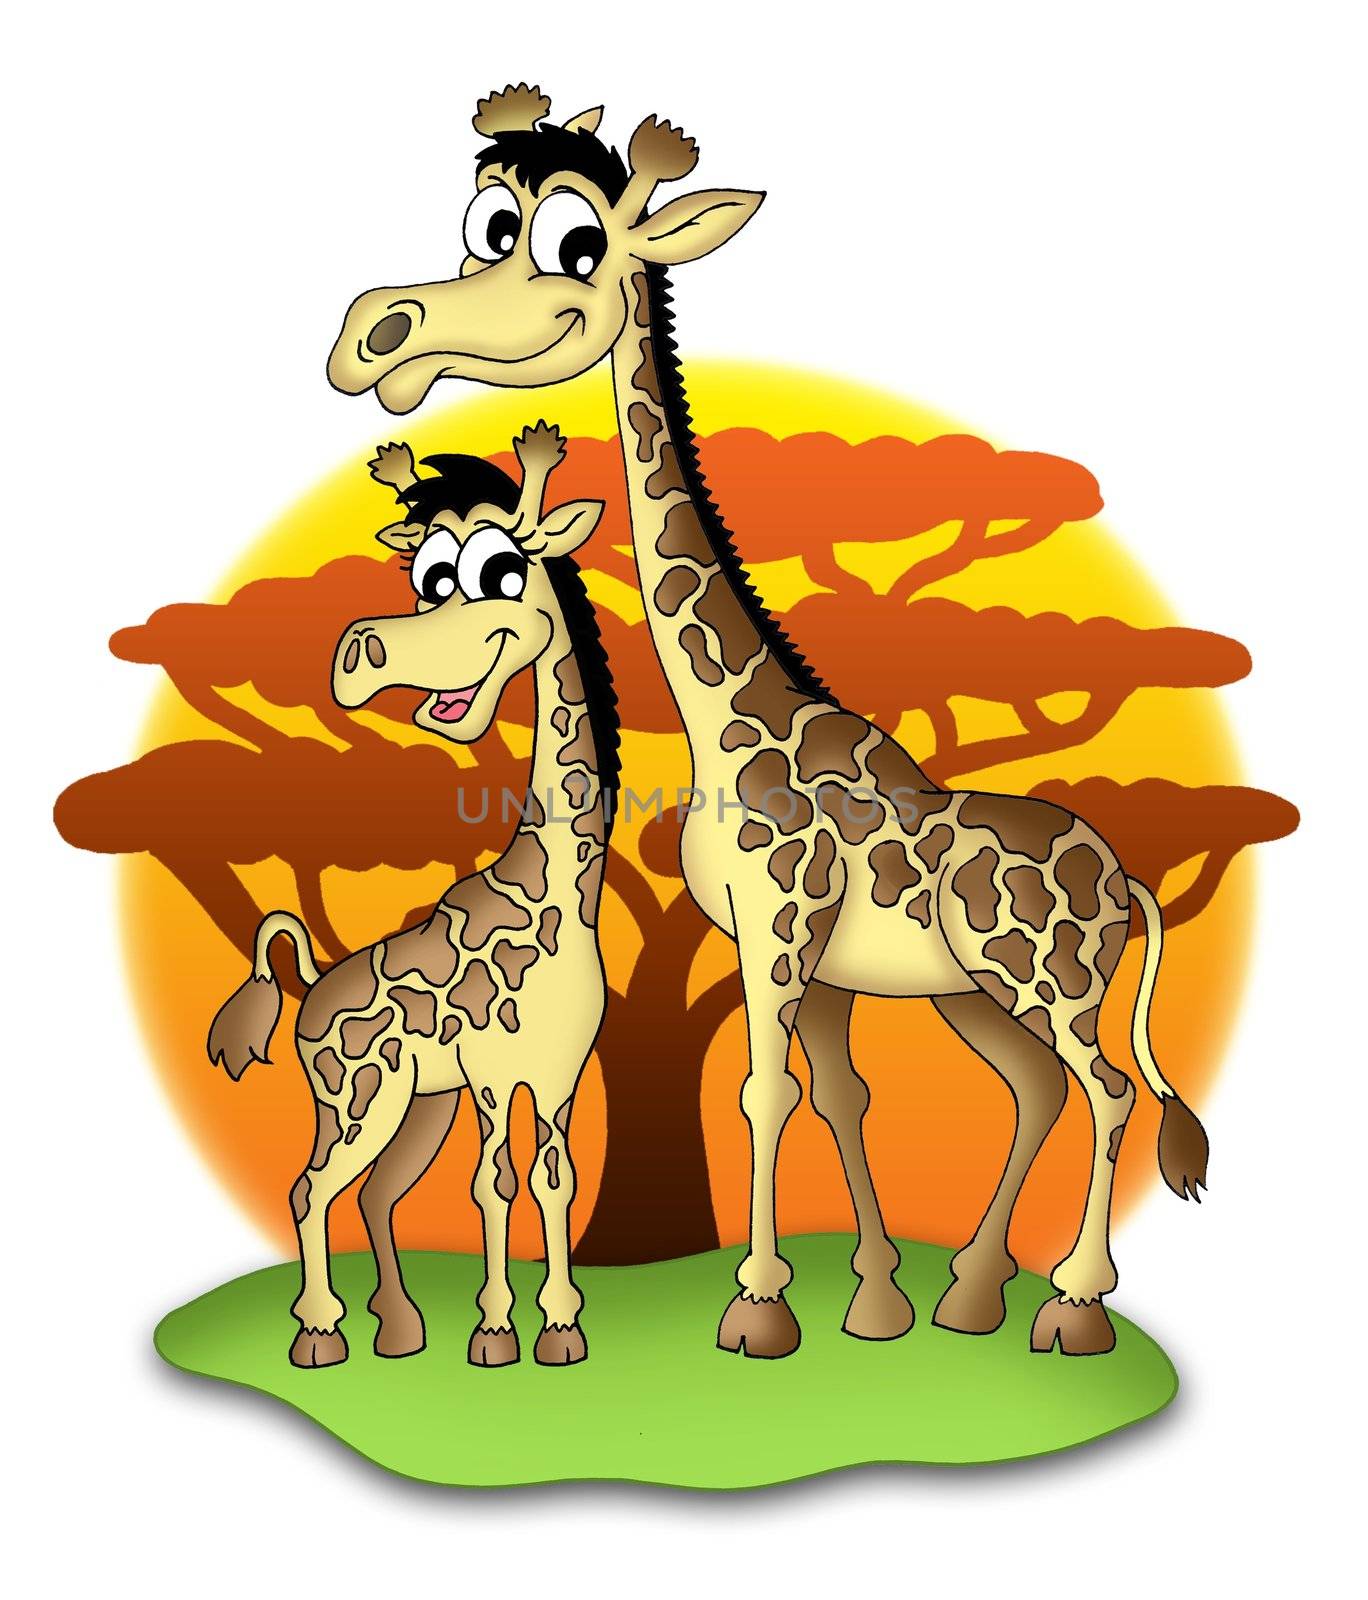 Two smiling giraffes - color illustration.